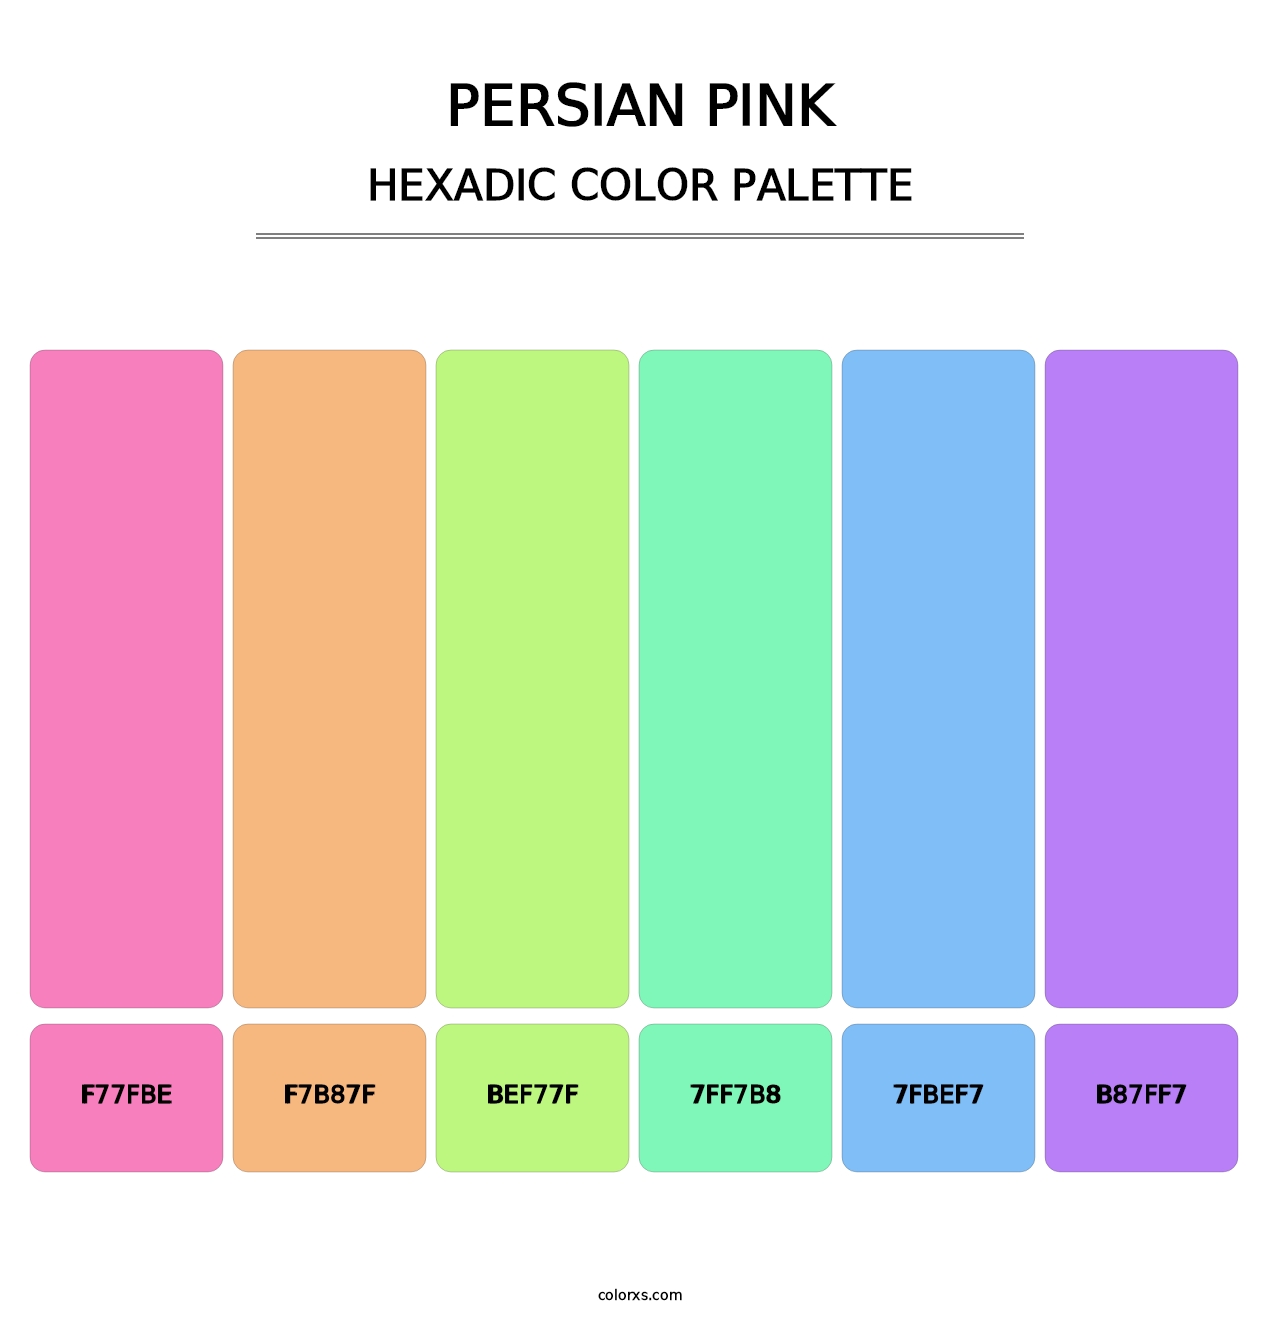 Persian Pink - Hexadic Color Palette